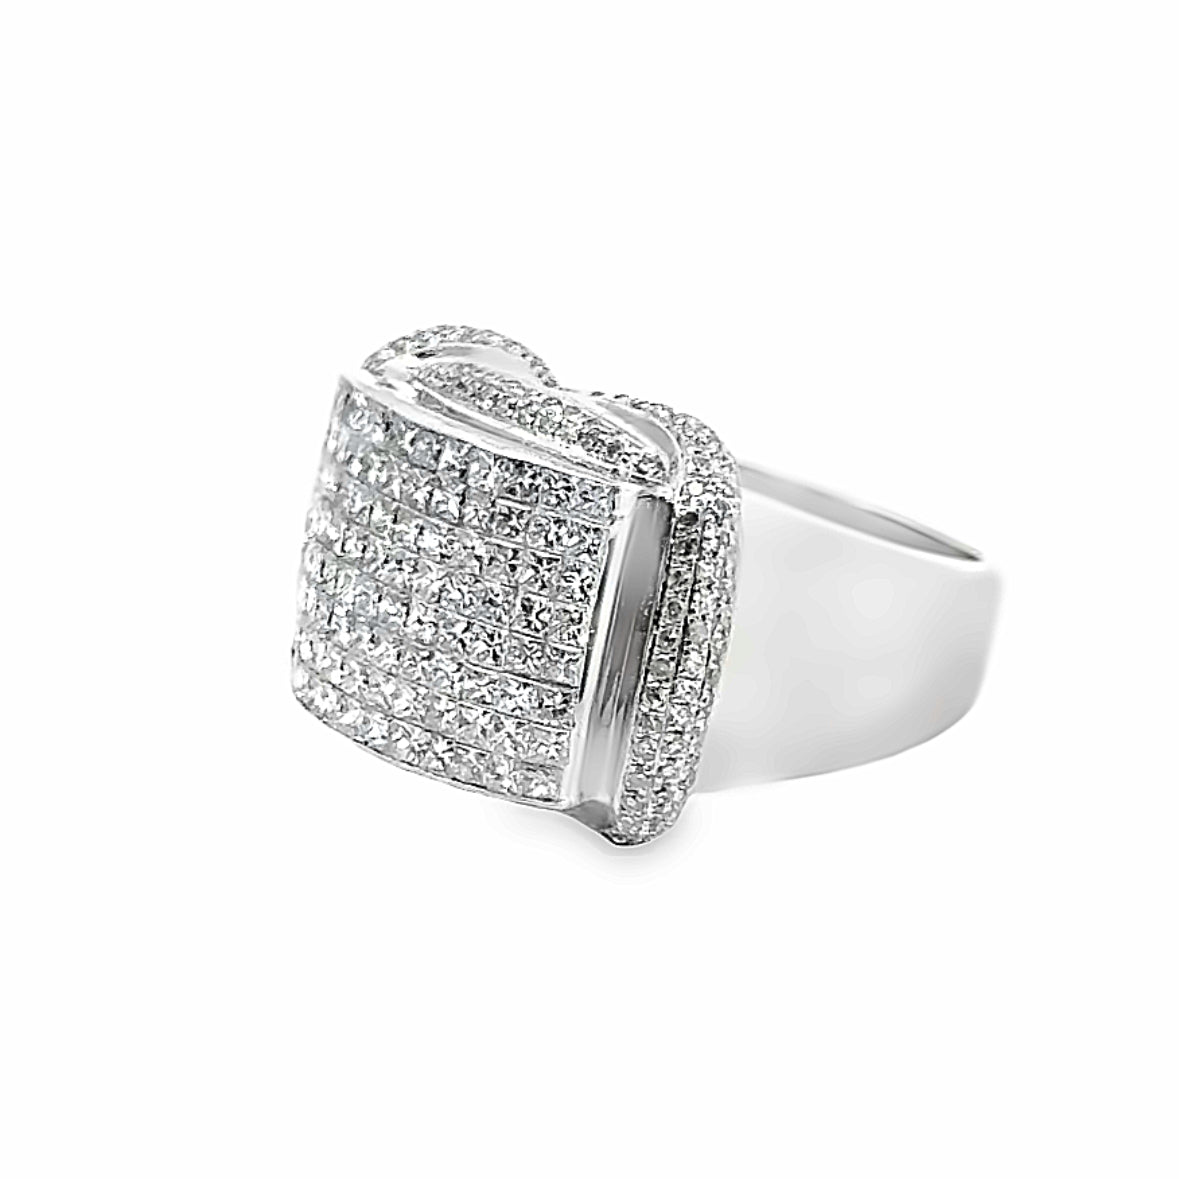 Stunning 14K White Gold 5.84 Carats Diamond ring